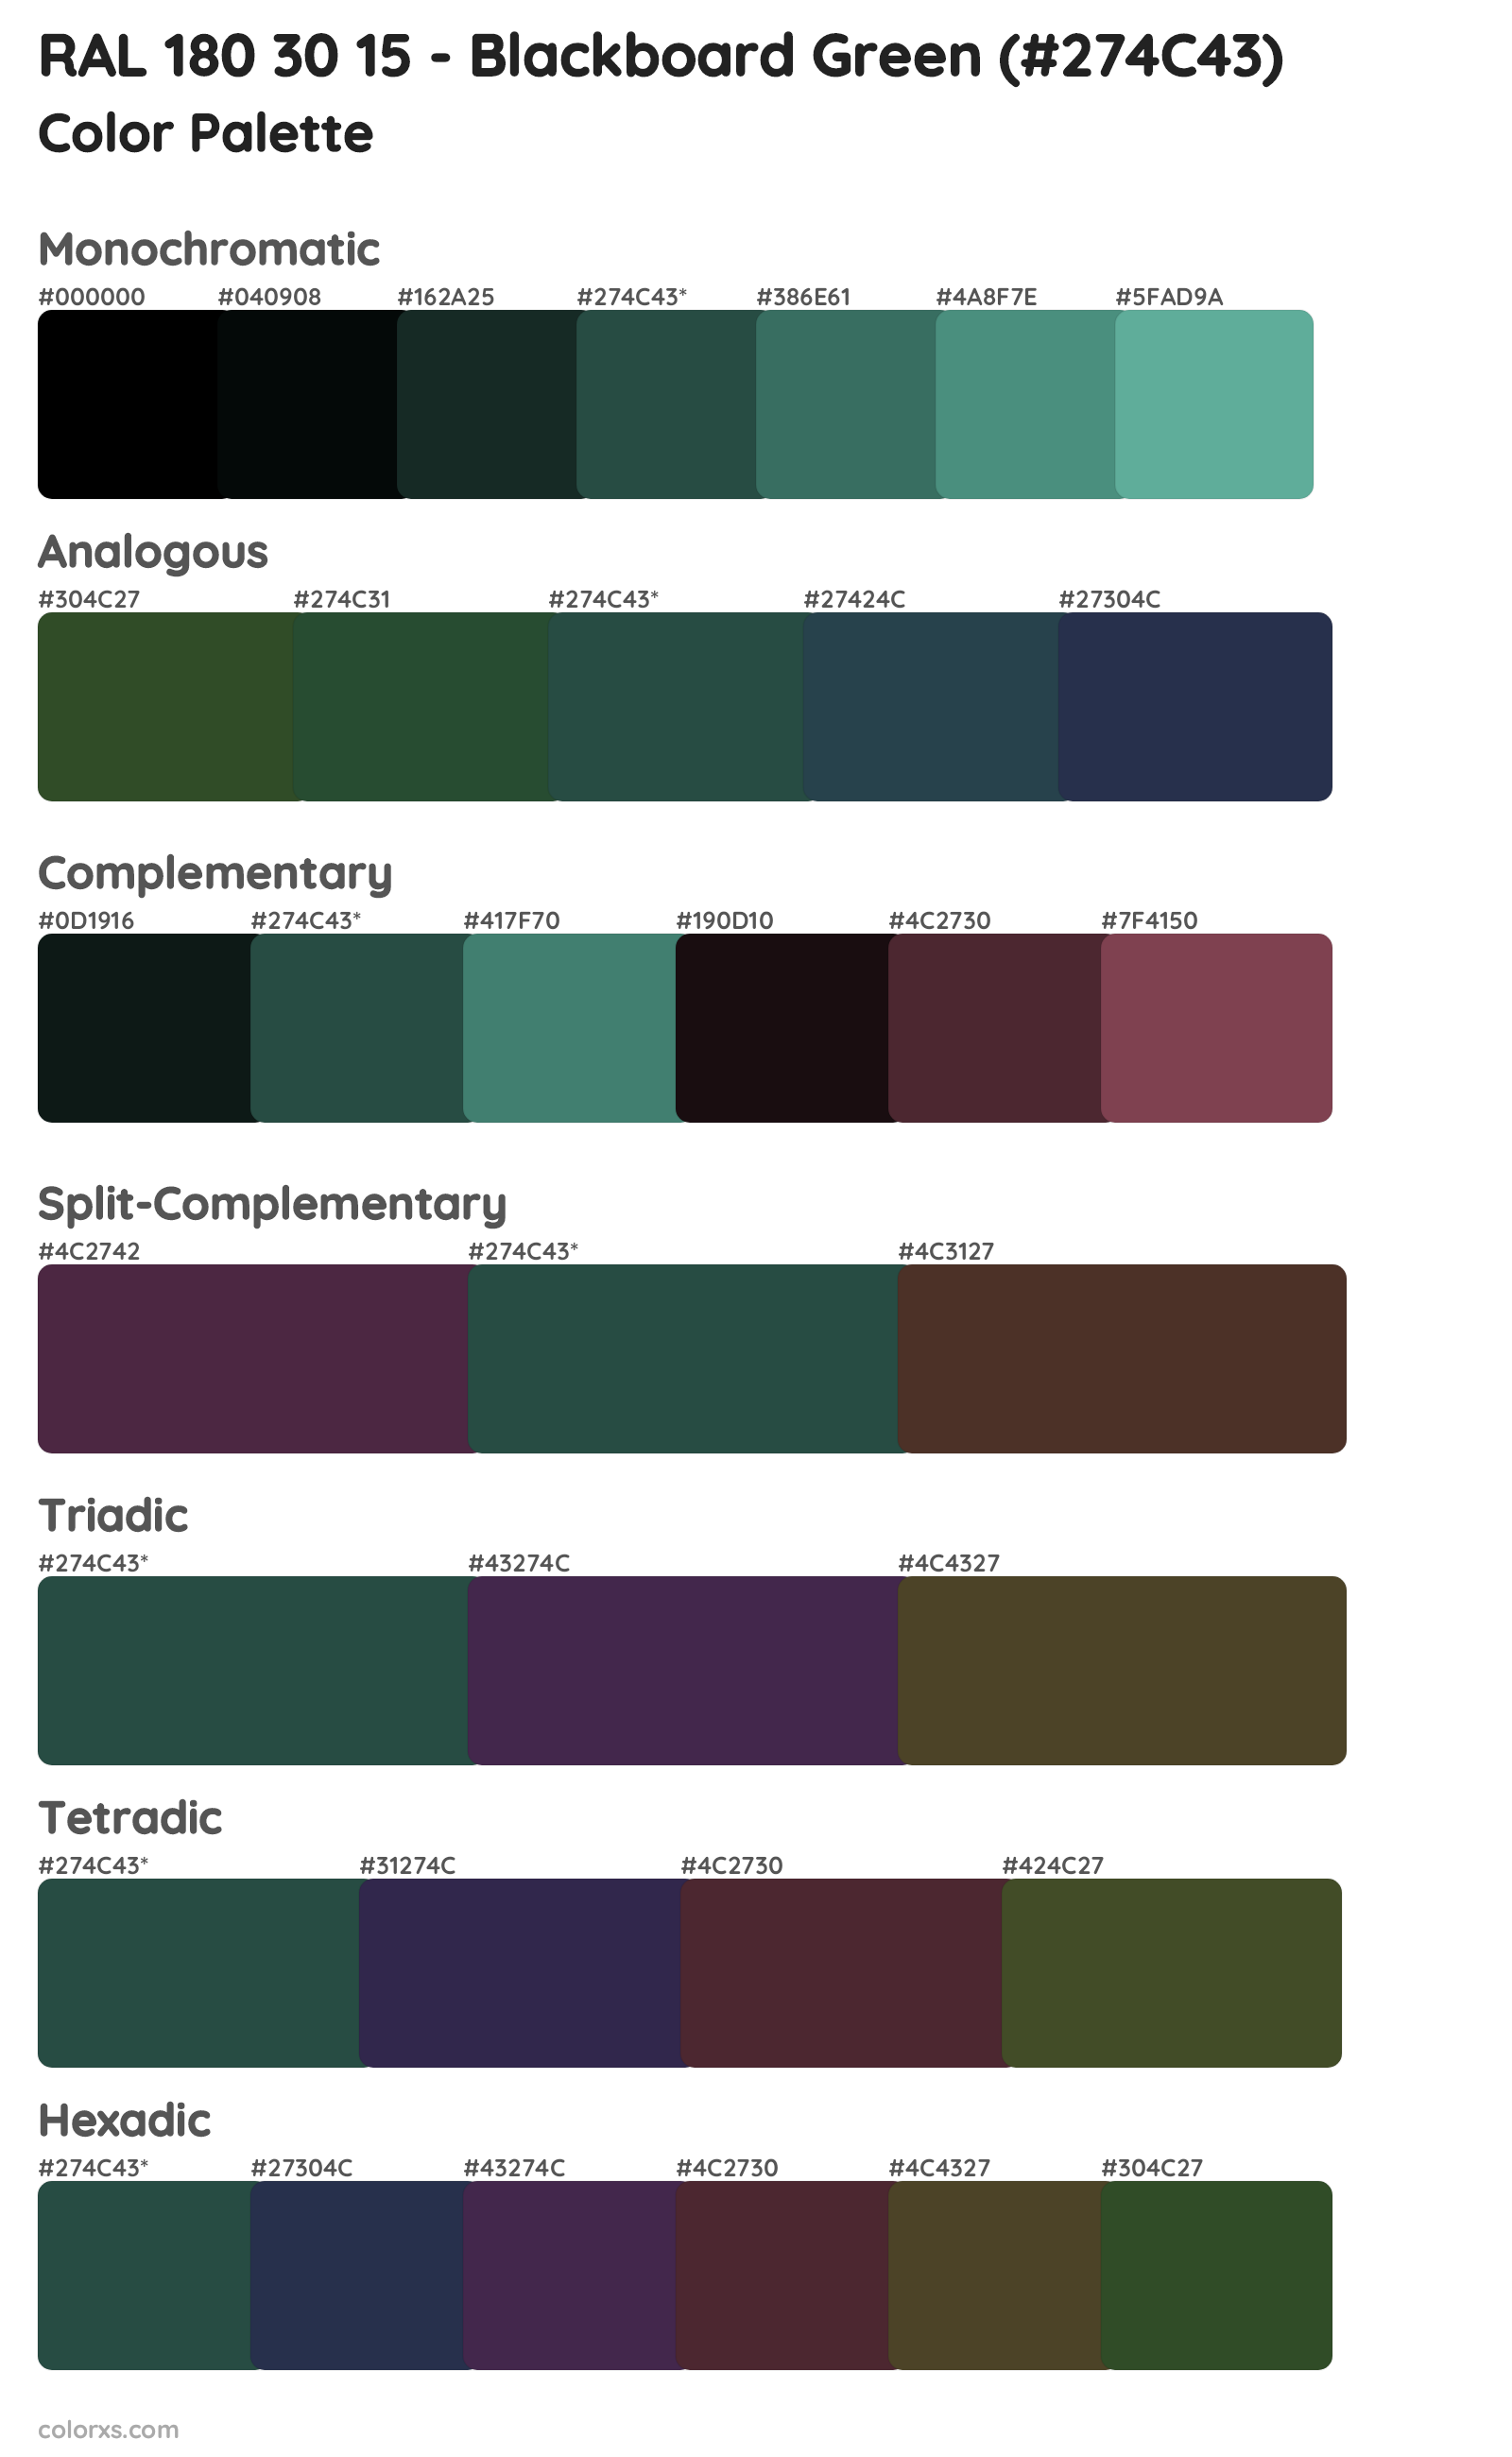 RAL 180 30 15 - Blackboard Green Color Scheme Palettes